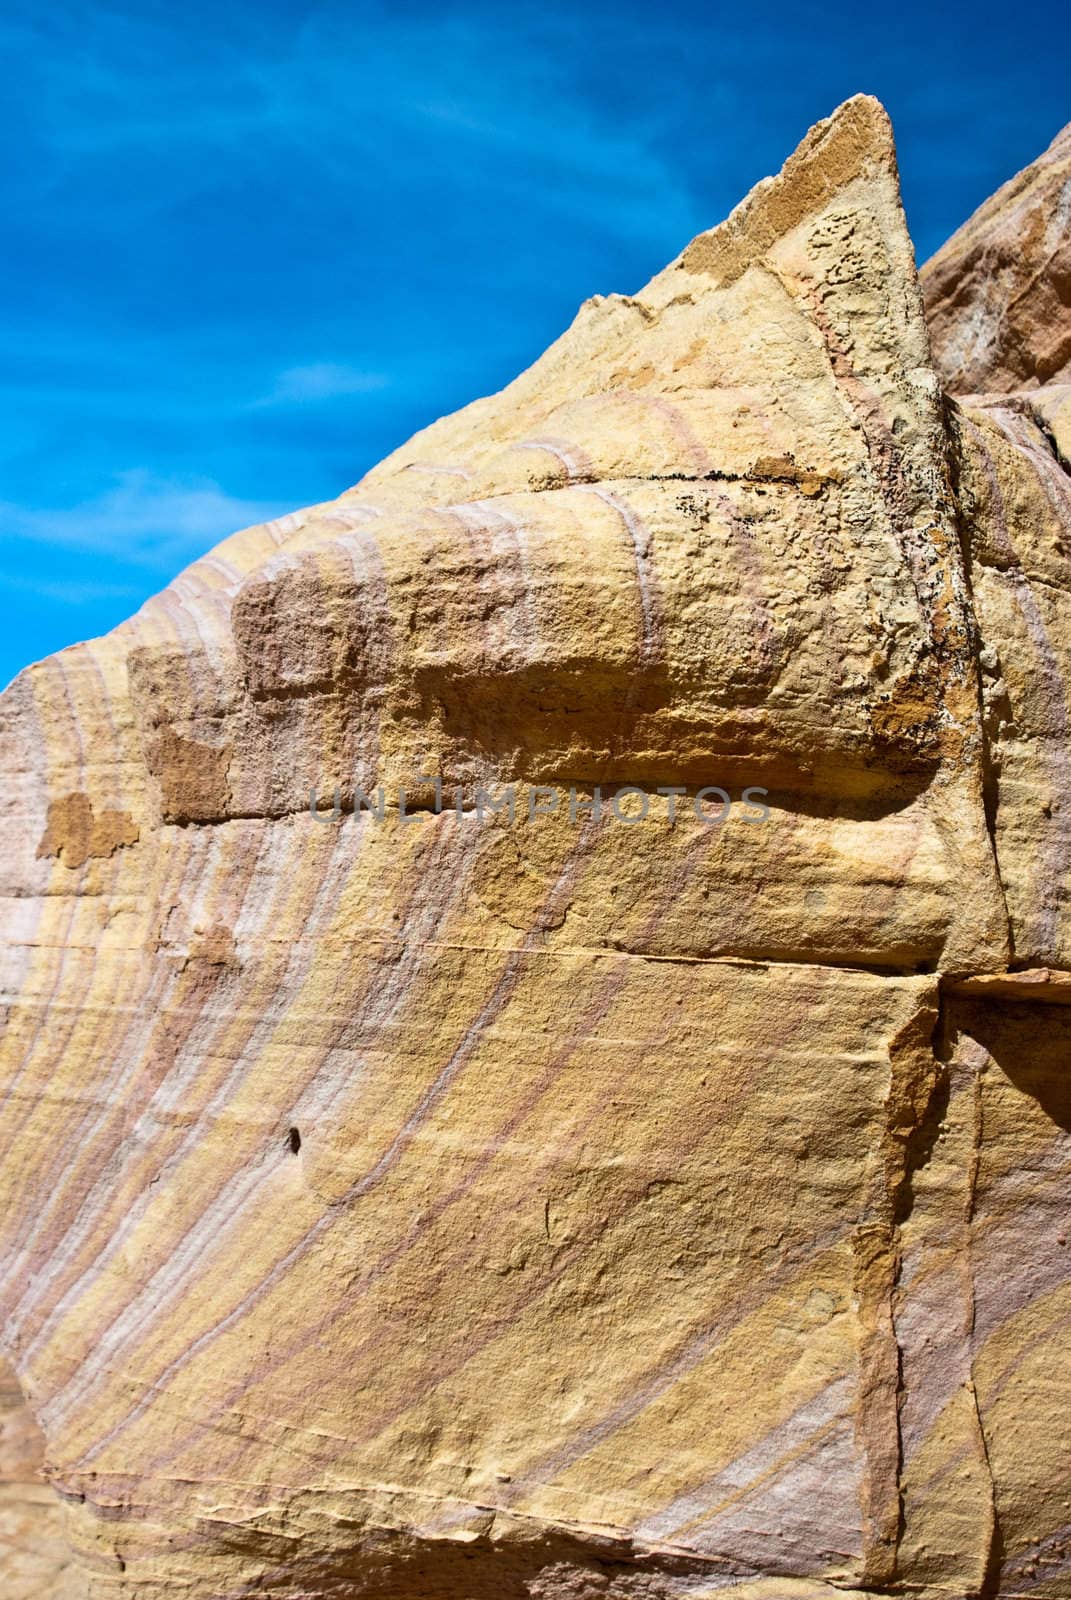 Sandstone rock formations imitate shark fins